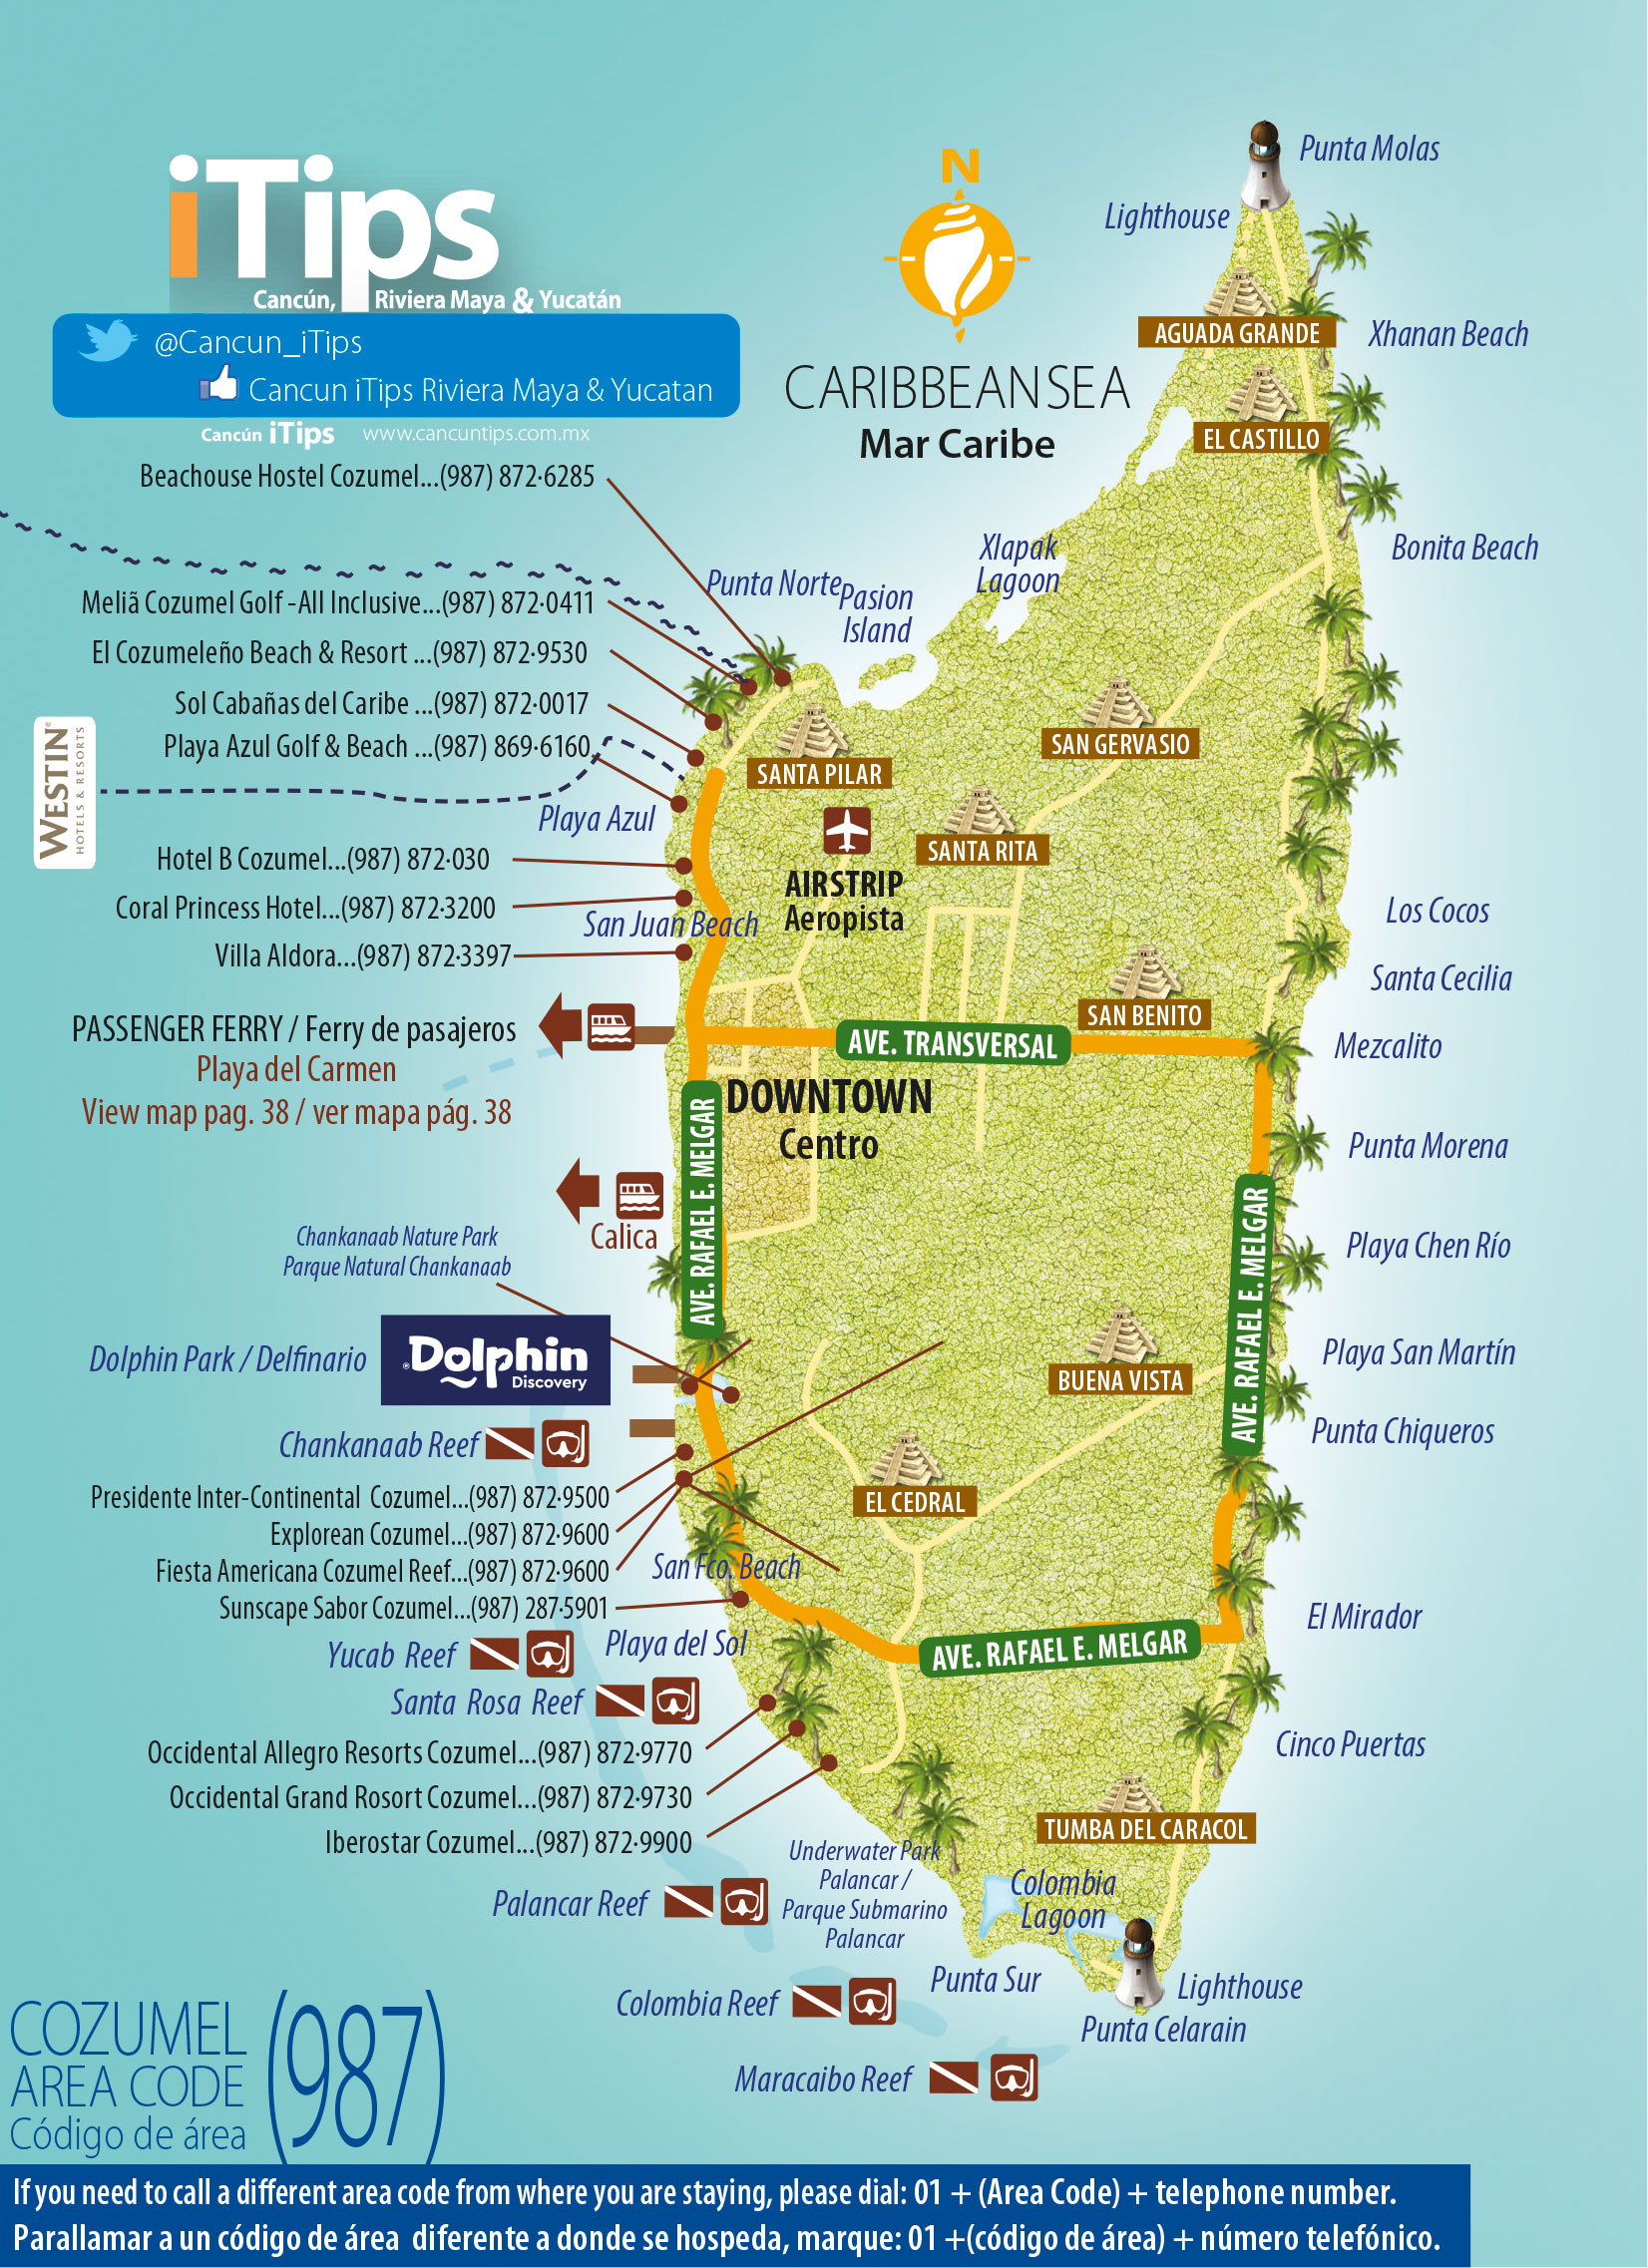 Mapa Cozumel Cancun Tips